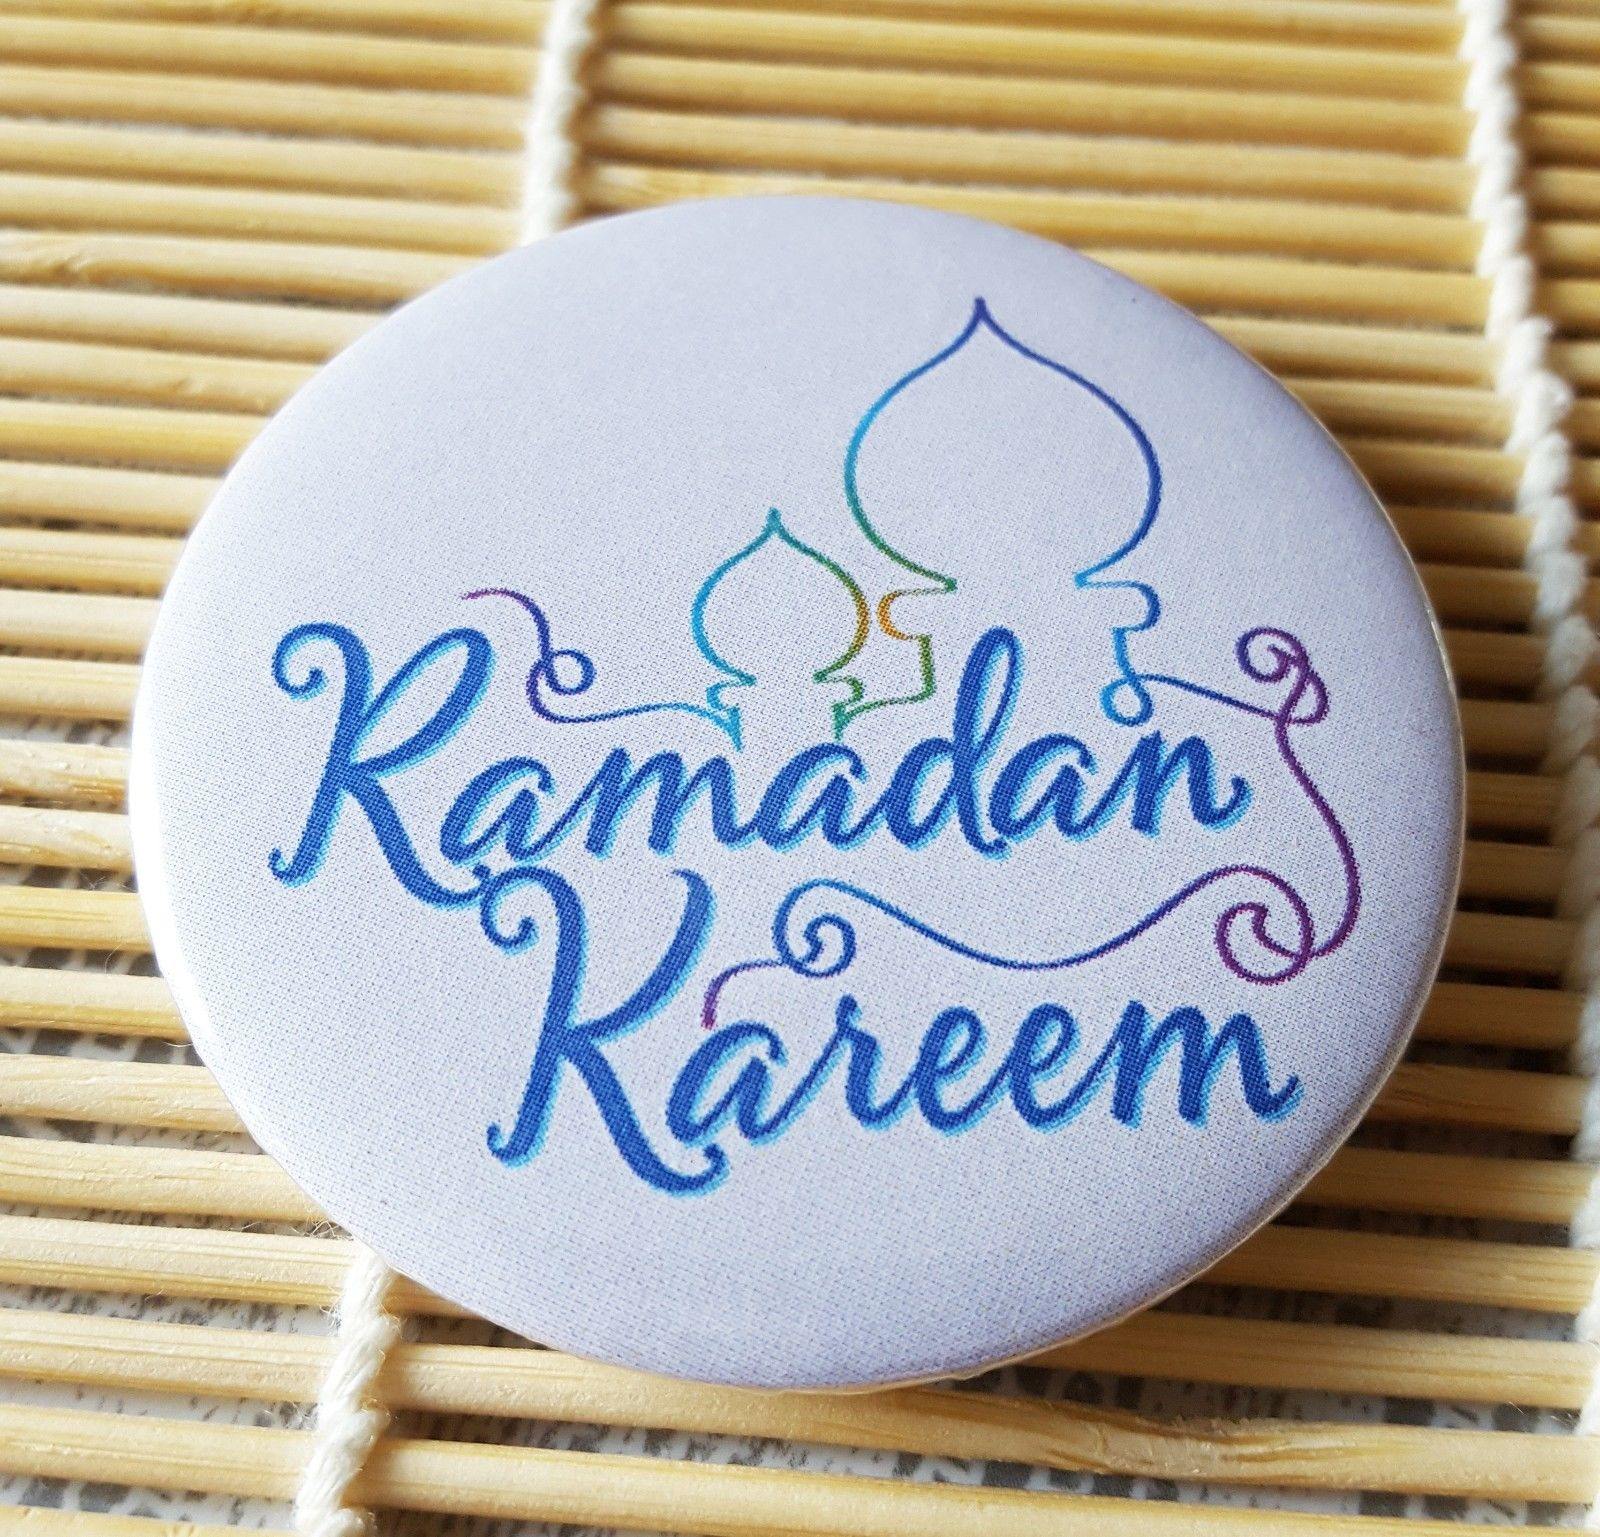 Muslim BADGE BUTTON PIN "Ramadan" (Big Size 2.25inch/58mm) ISLAM GIFT - Arabian Shopping Zone